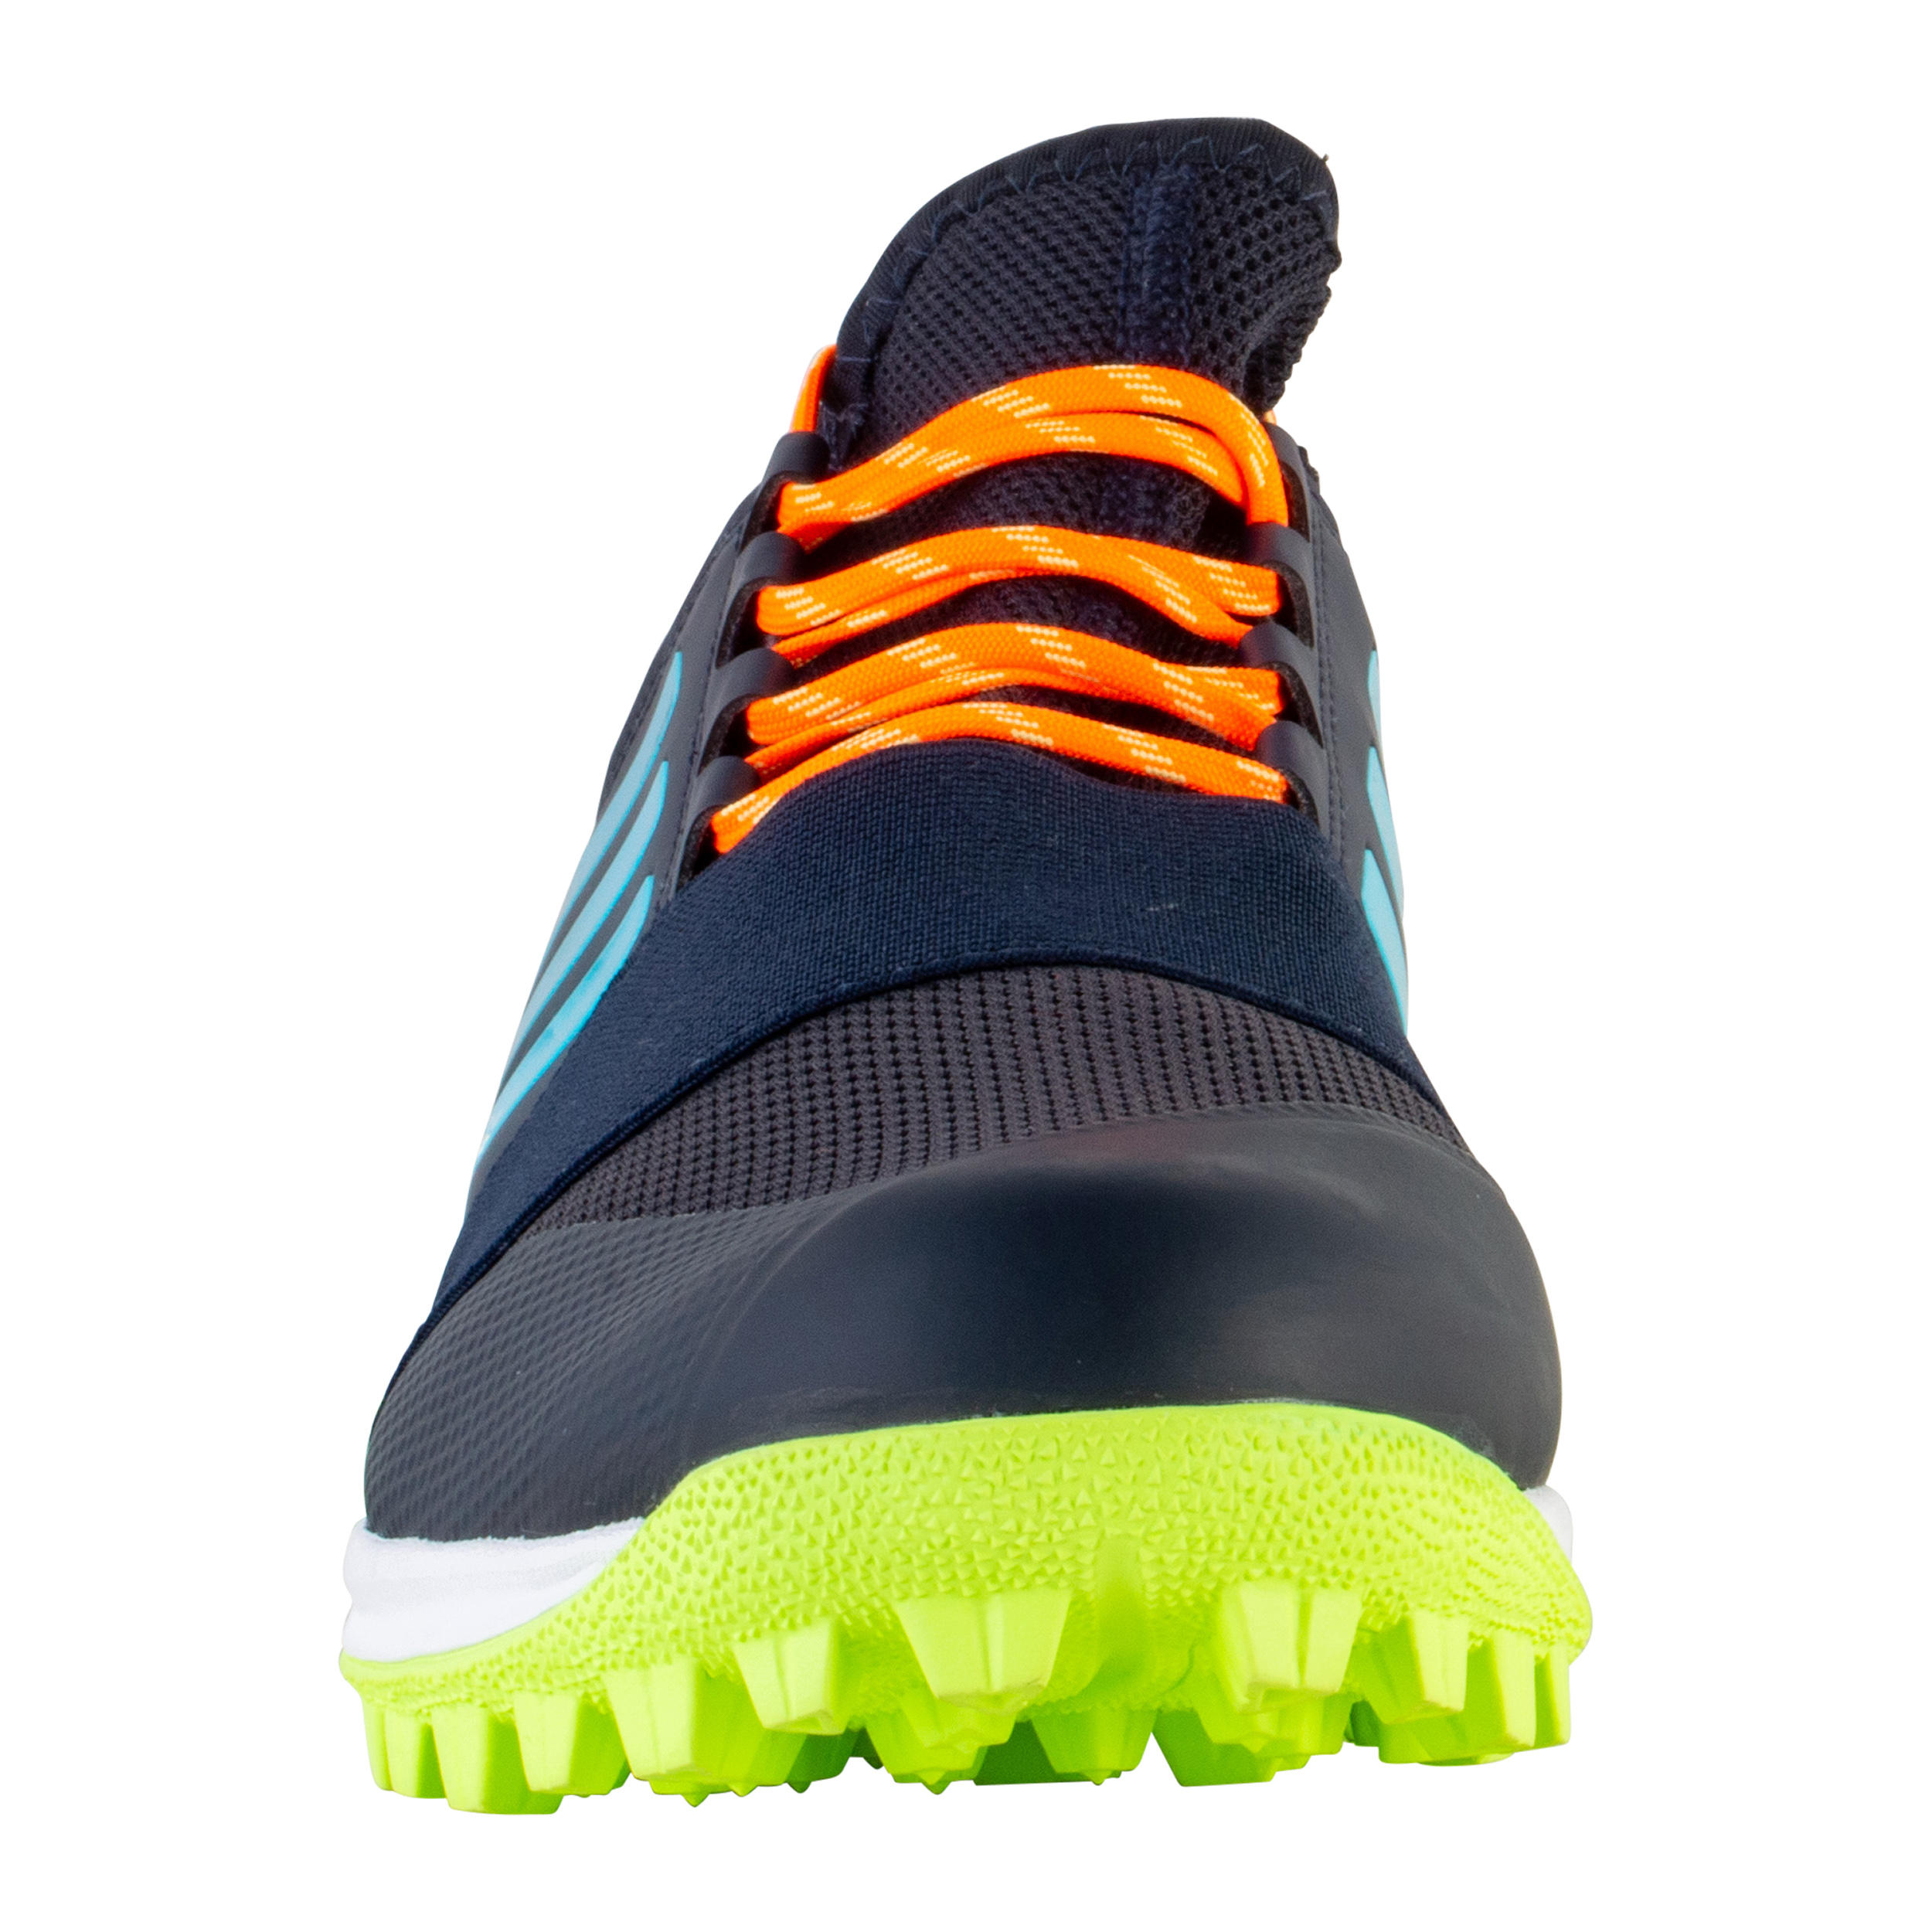 Adult Moderate-Intensity Field Hockey Shoes Divox 1.9S - Navy/Orange 3/7